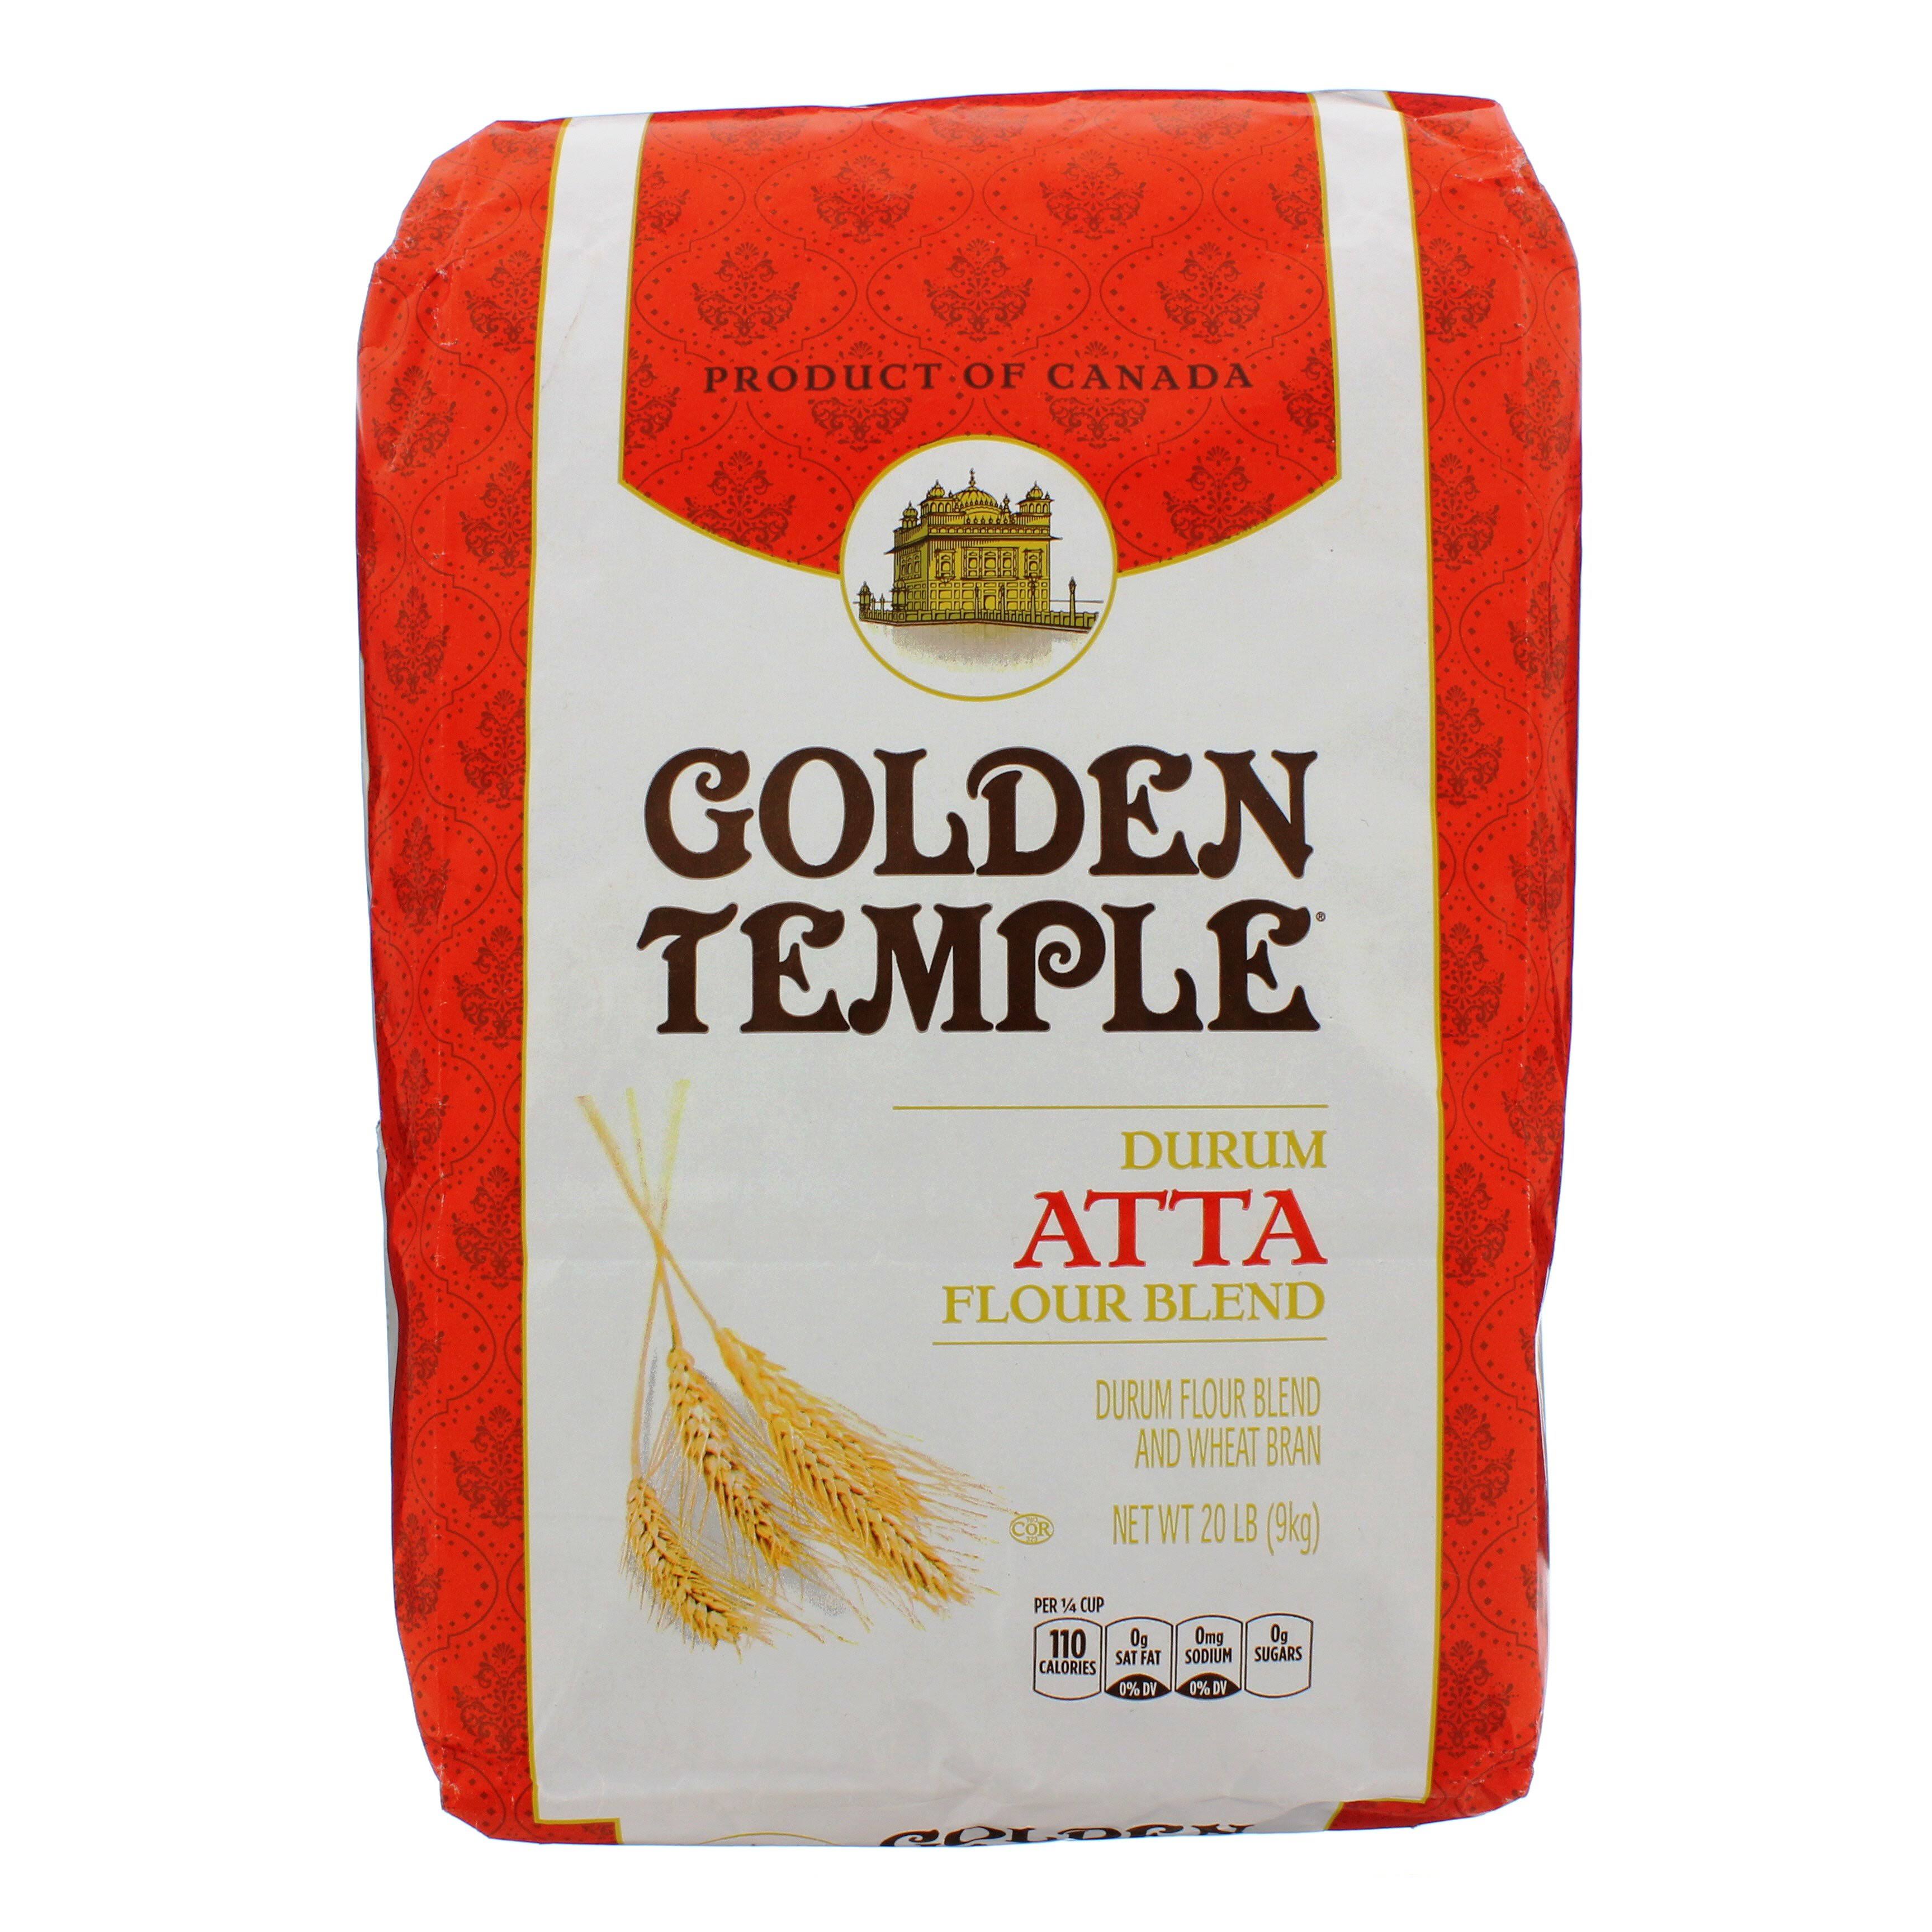 Golden Temple Durum Atta Flour - 20lbs